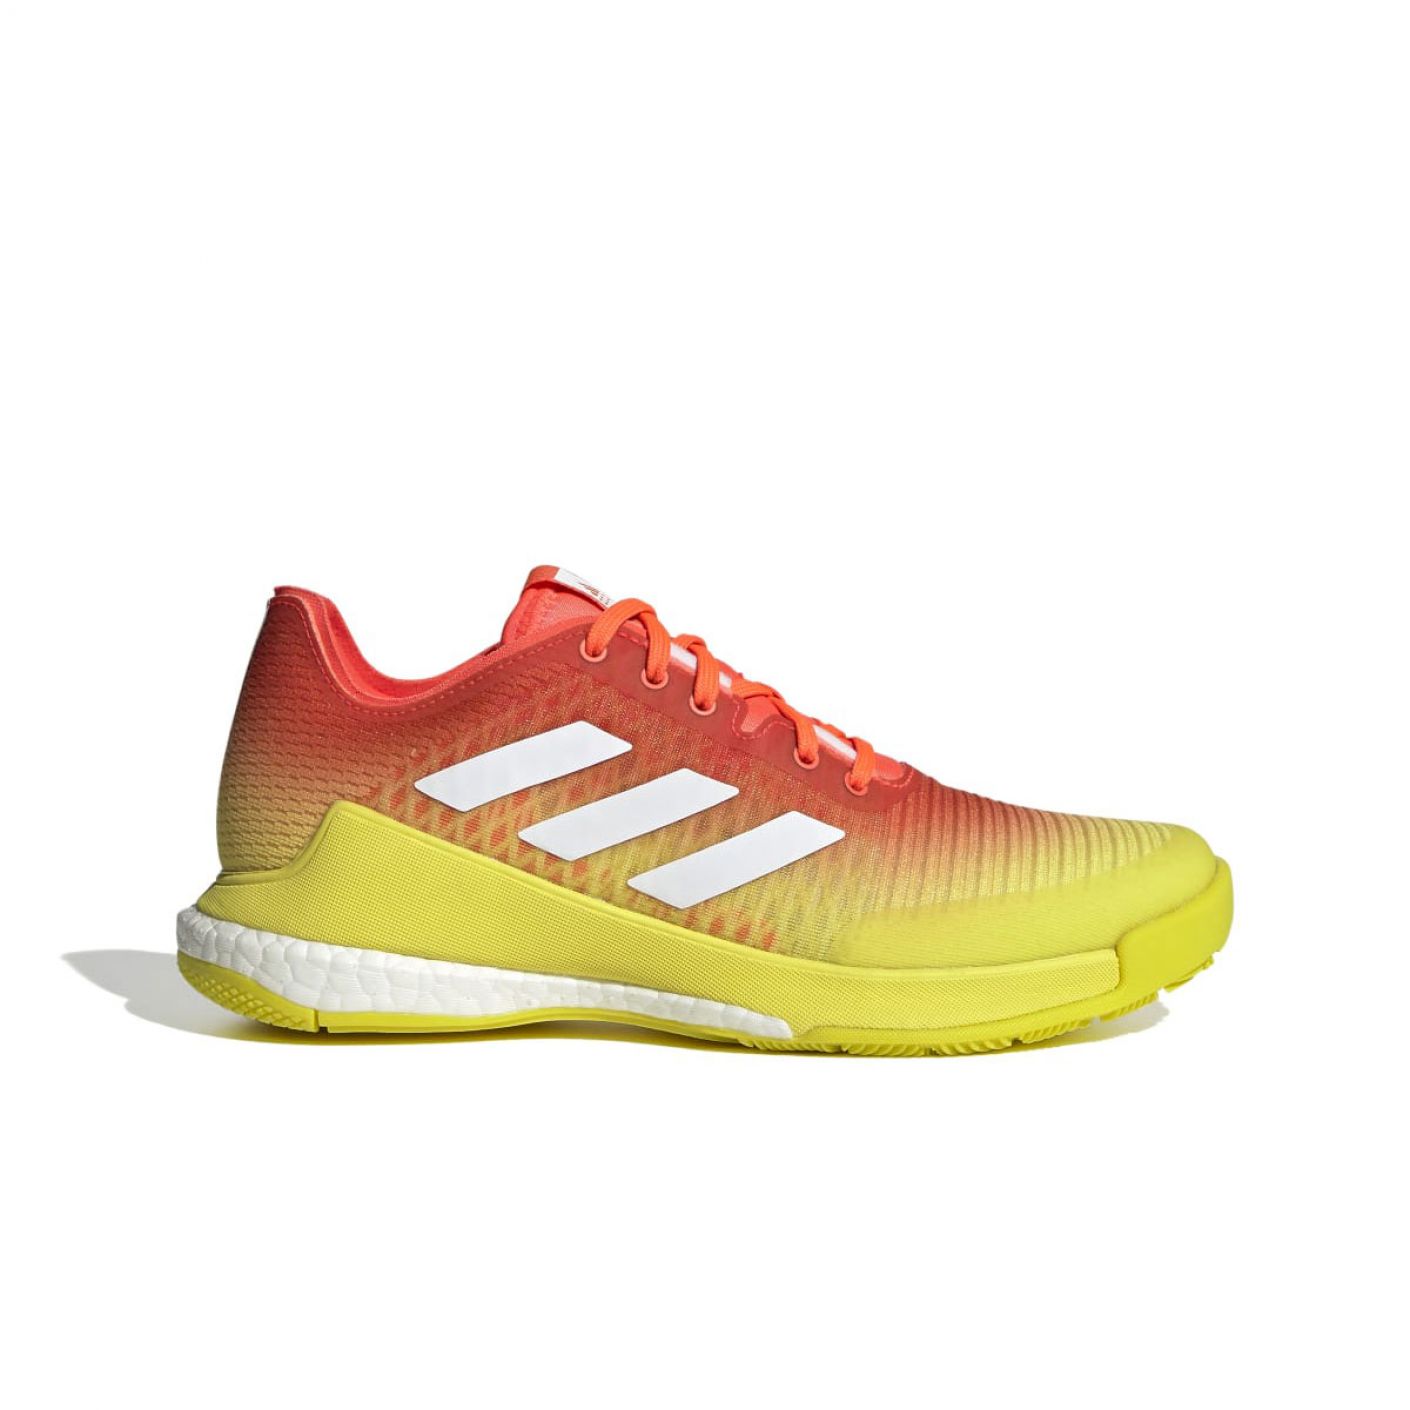 Adidas Crazyflight Orange/Yellow